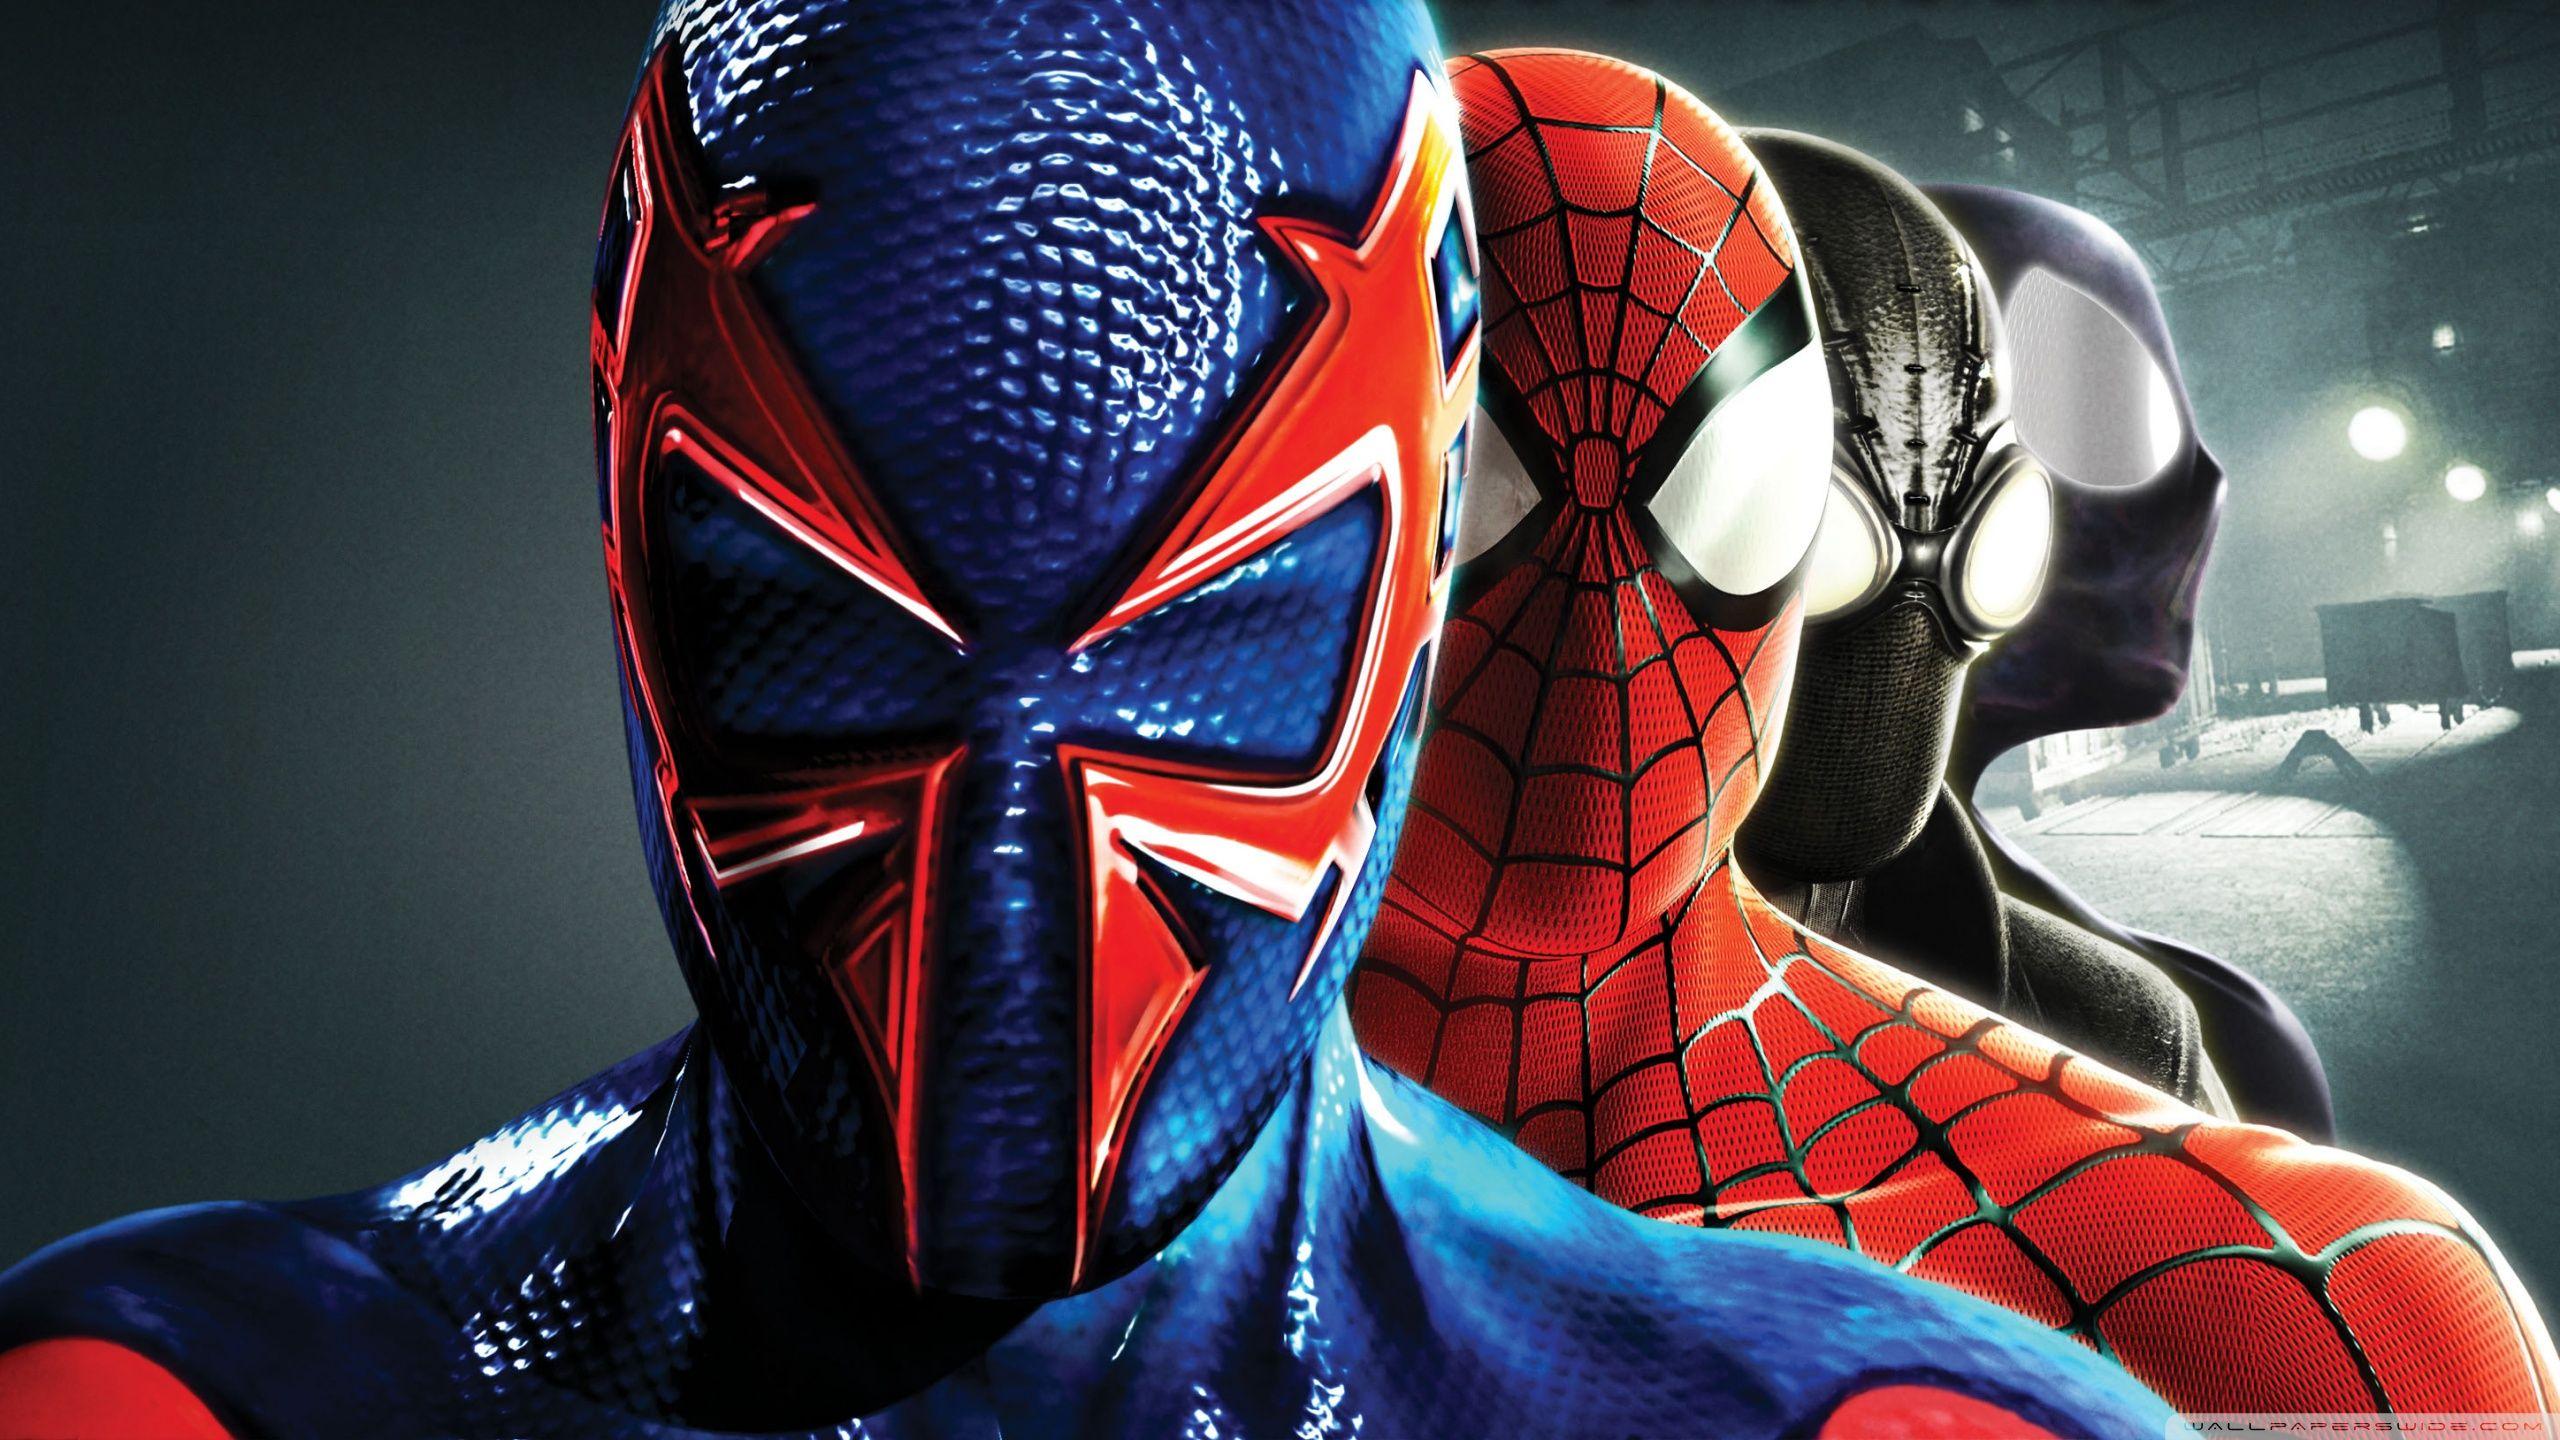 Spider-Man 4K Ultra HD Wallpapers - Top Free Spider-Man 4K Ultra HD